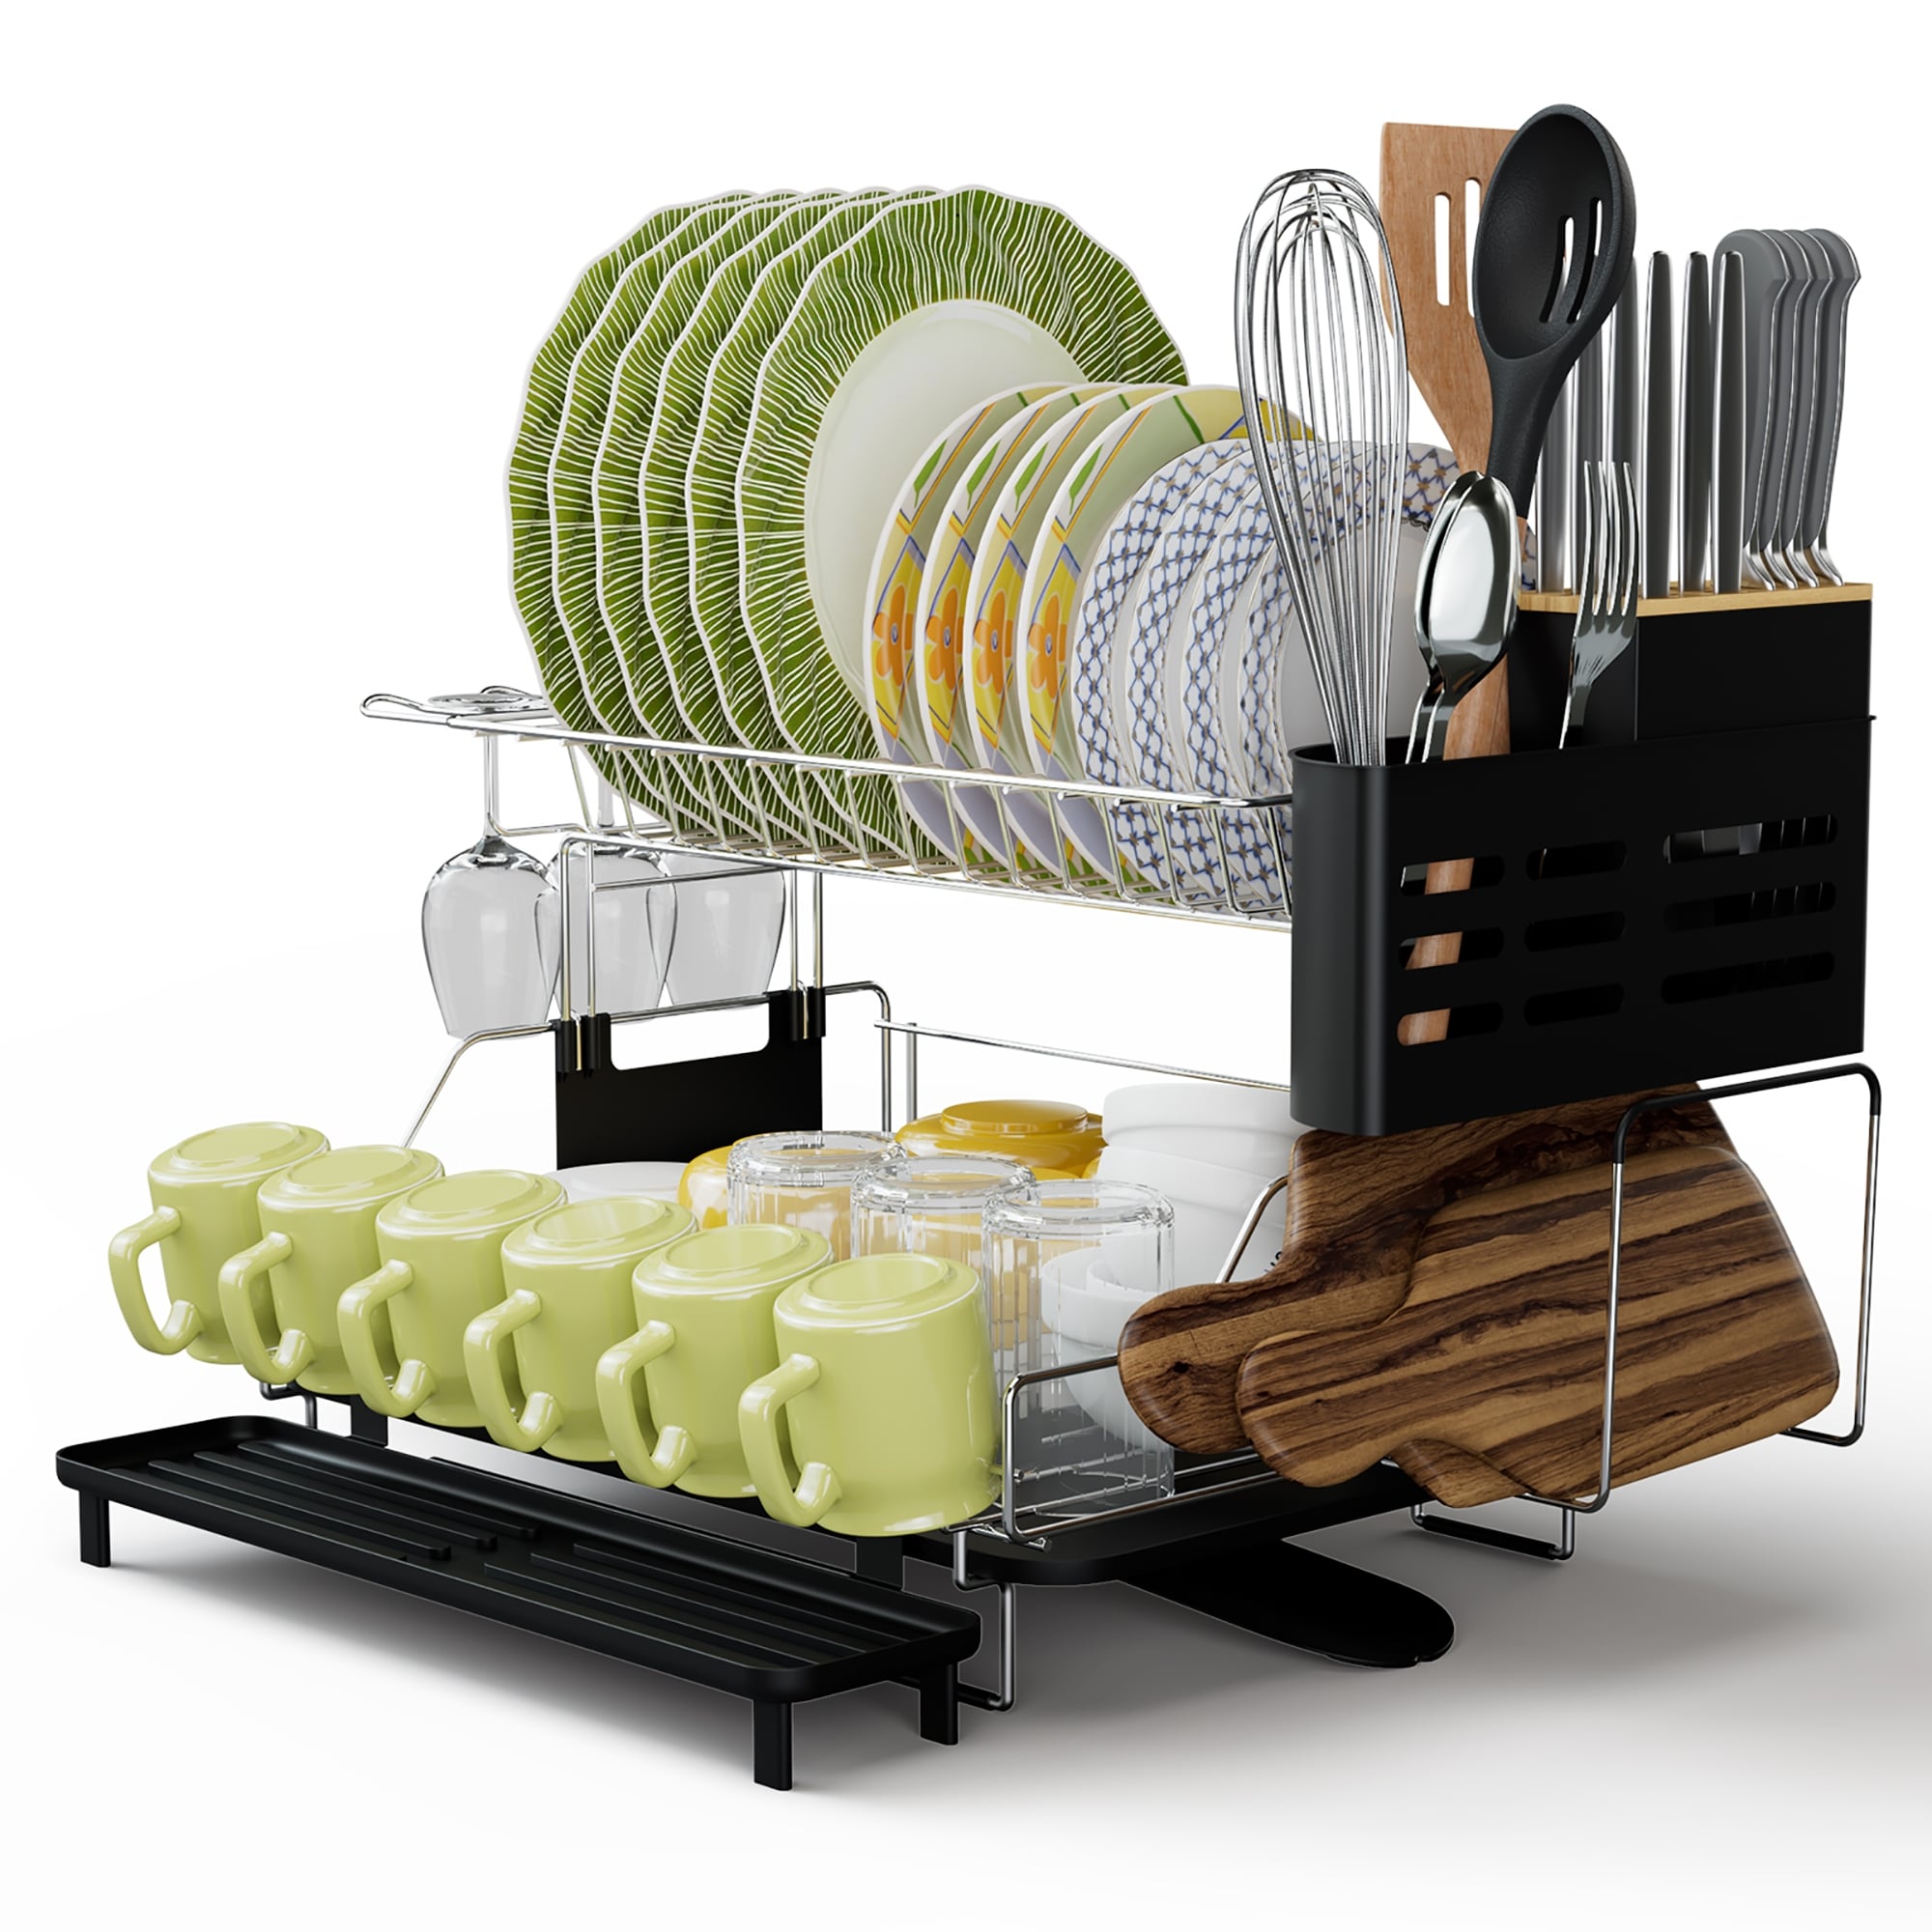 Costway Dish Drying Rack Detachable 2 Tier Dish Rack with Drainboard - Silver, Black - 22.8'' x 16.5'' x 14.6'' (L x W x H)